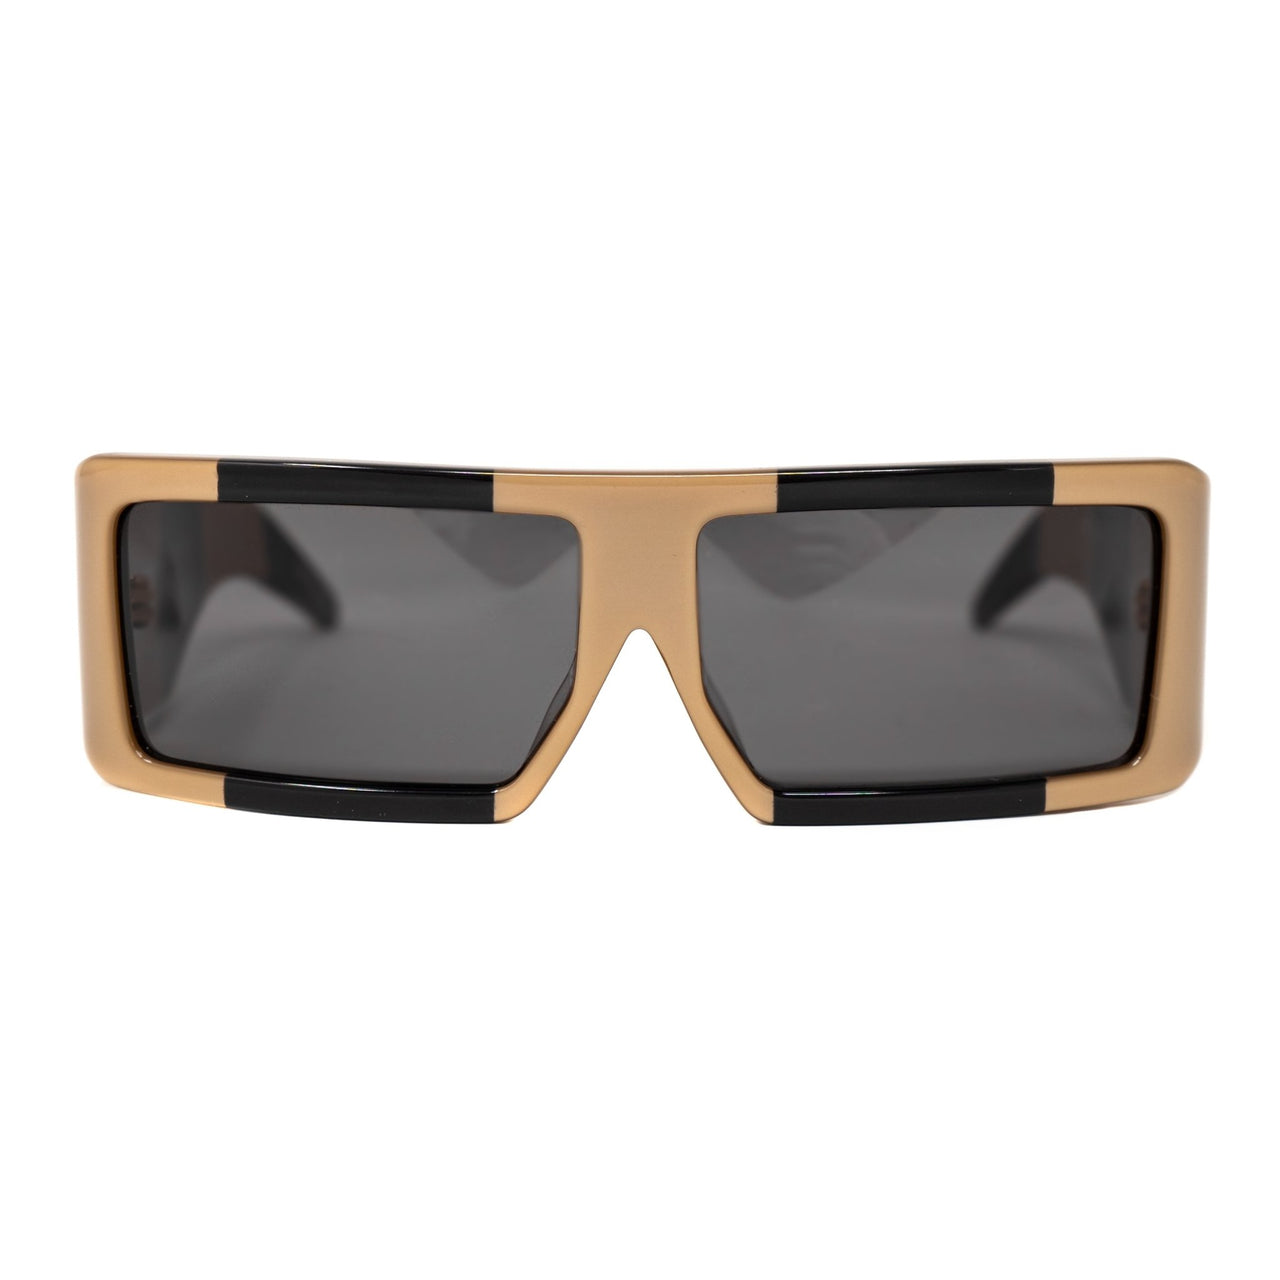 Jeremy Scott Sunglasses Rectangular Big Tut Brown & Black with Grey CAT3 Lenses 6JSBIGTUTGOLDBLACK - Watches & Crystals